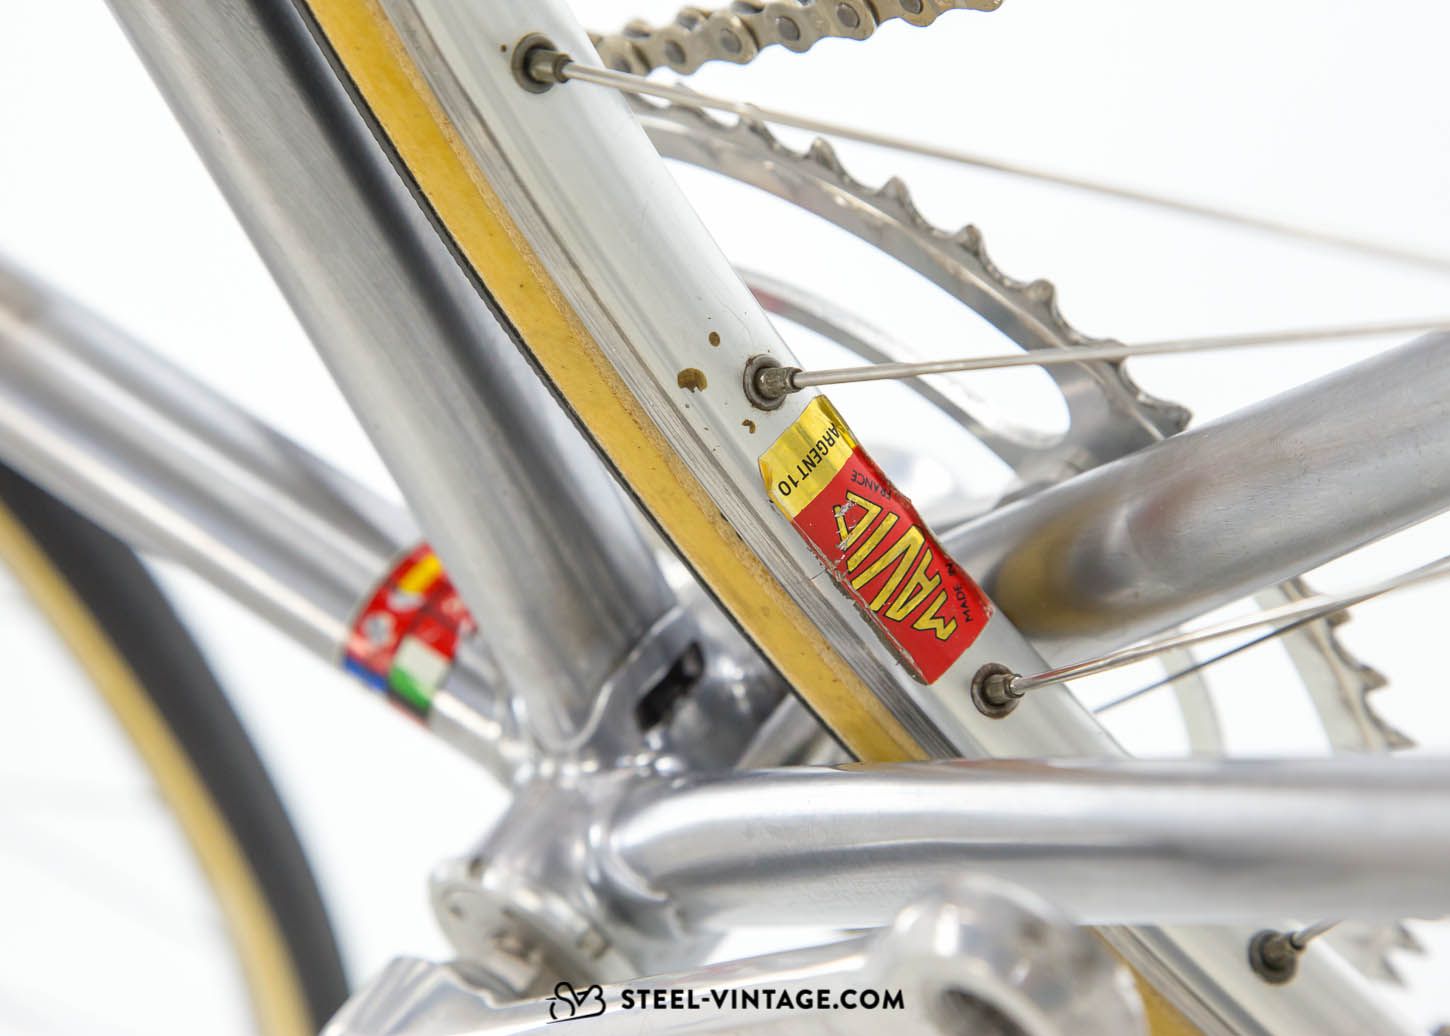 Freschi-Silver-classic-steel-bicylce-italian-16.JPG